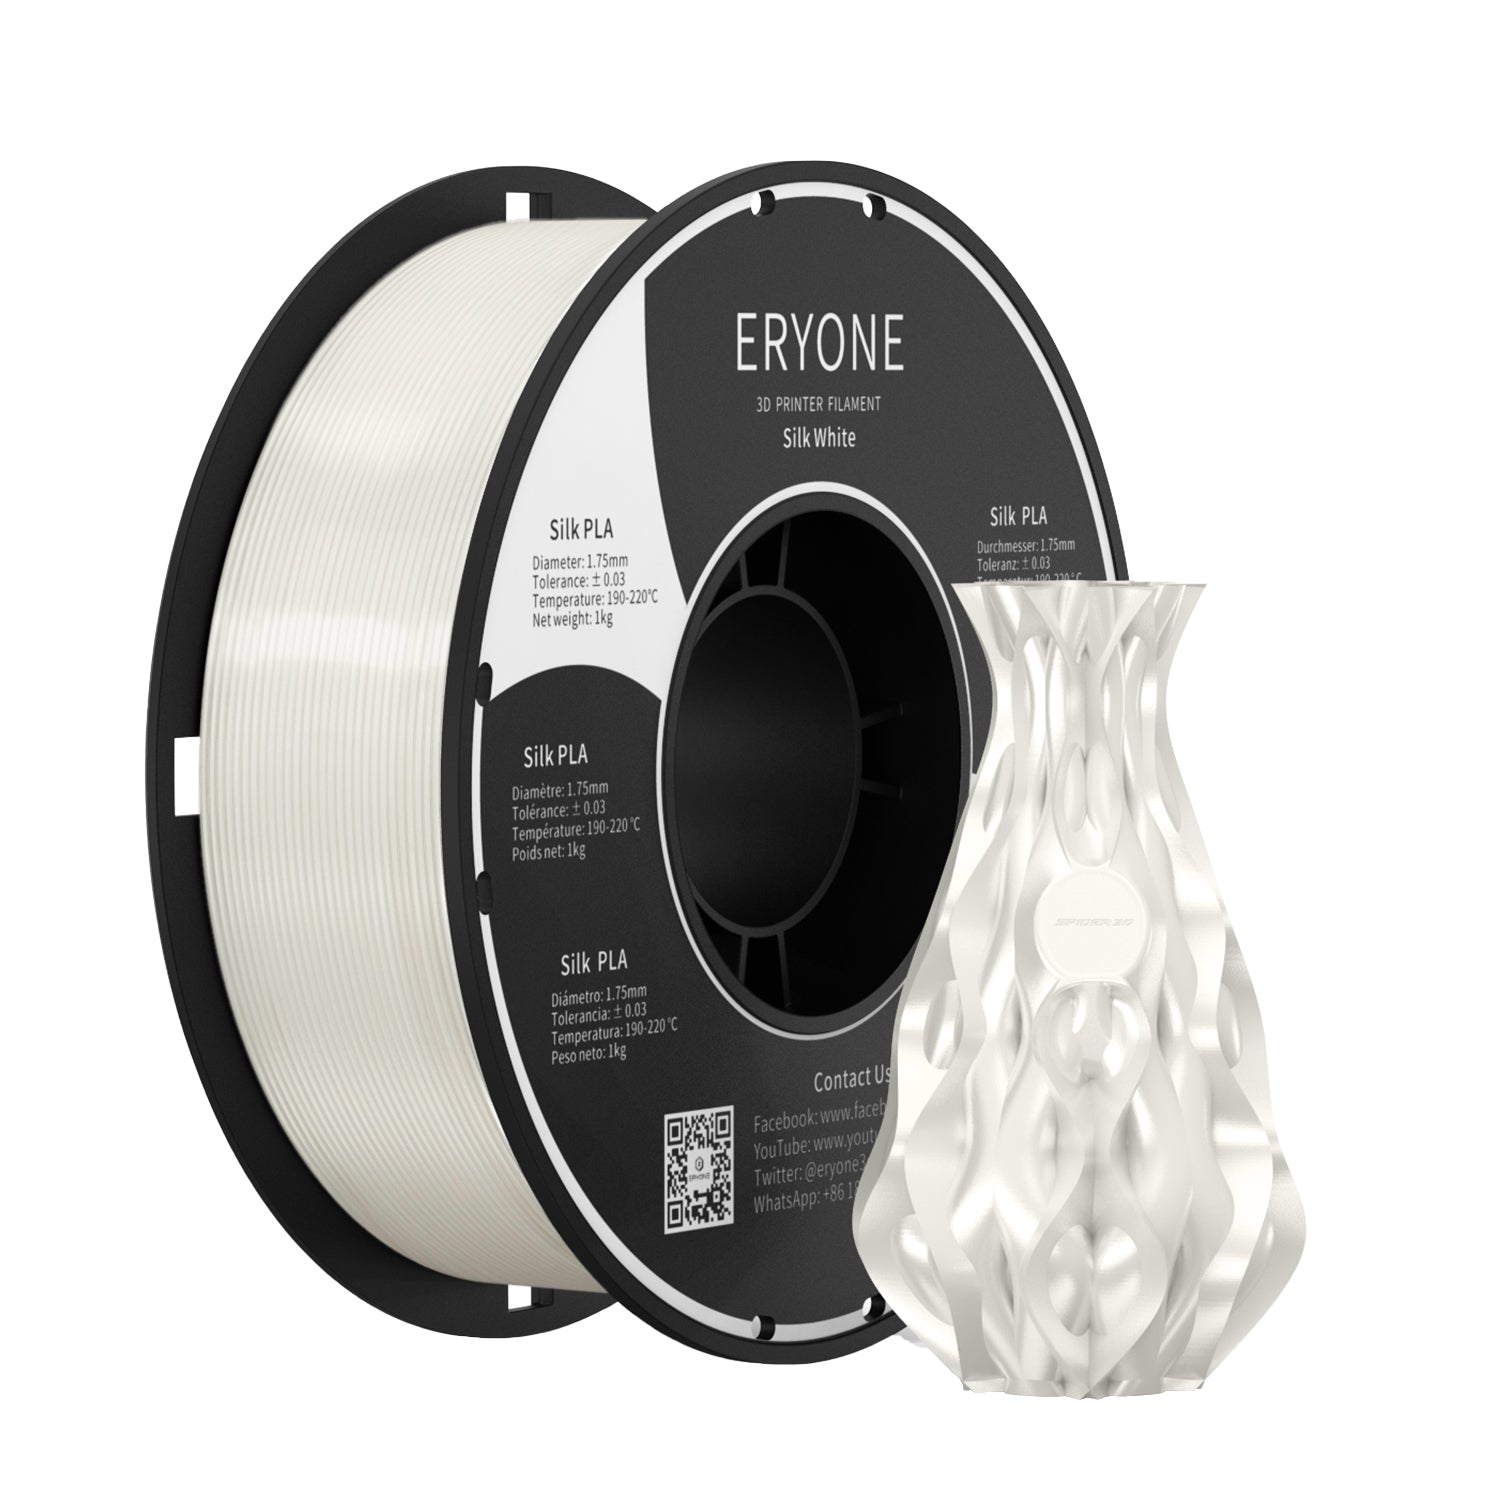 ERYONE Silk PLA Filament 1.75mm, Silky Shiny 3D Printing Material for 3D Printer and 3D Pen, 1kg 1 Spool, 1.75mm - eryone3d